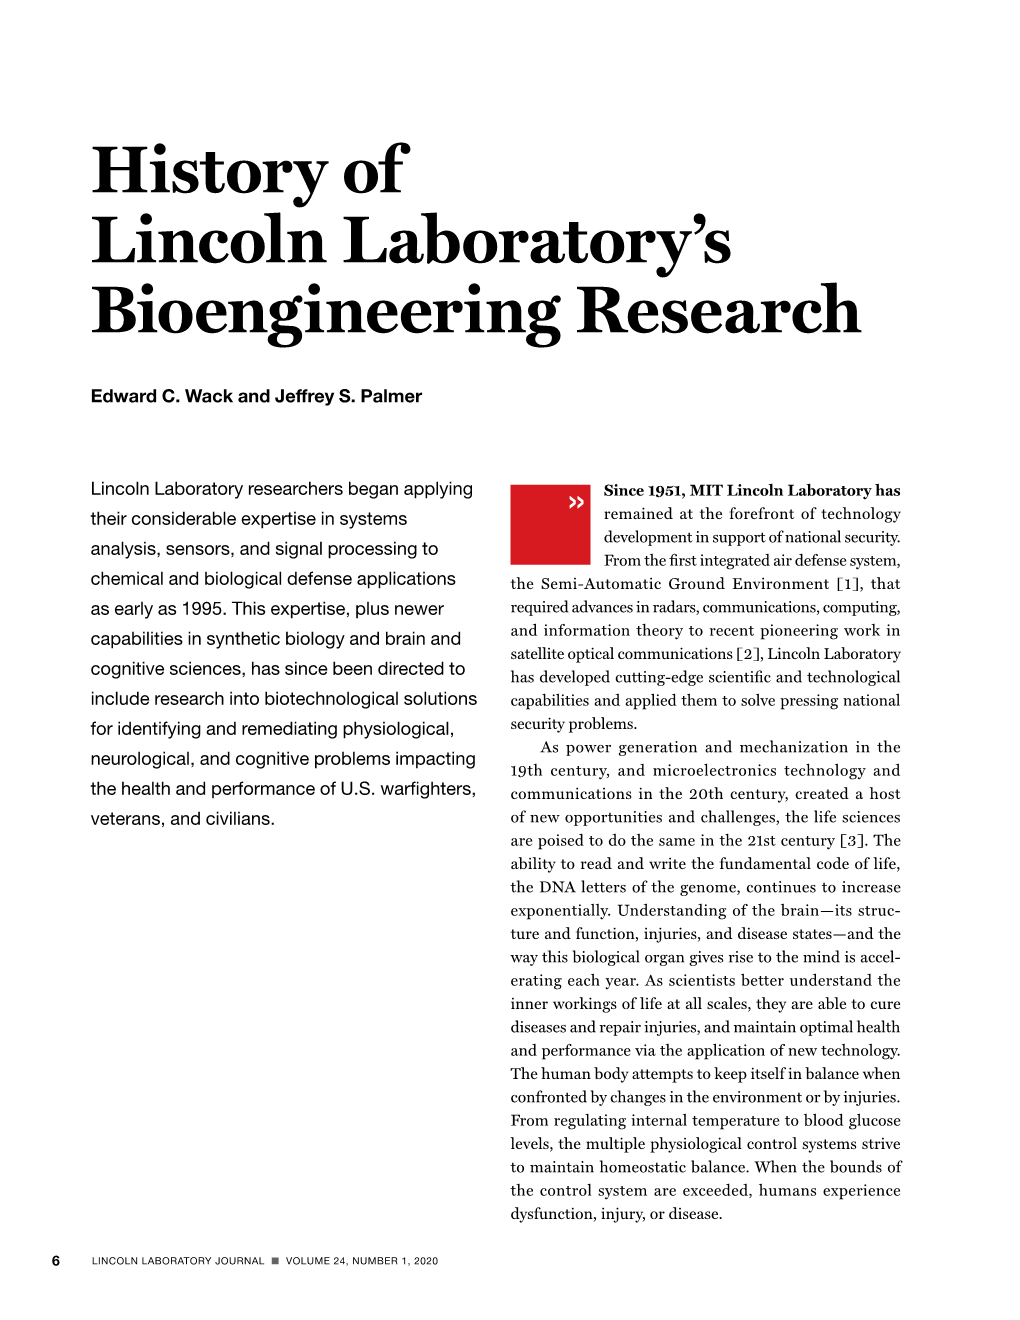 History of Lincoln Laboratory's Bioengineering Research